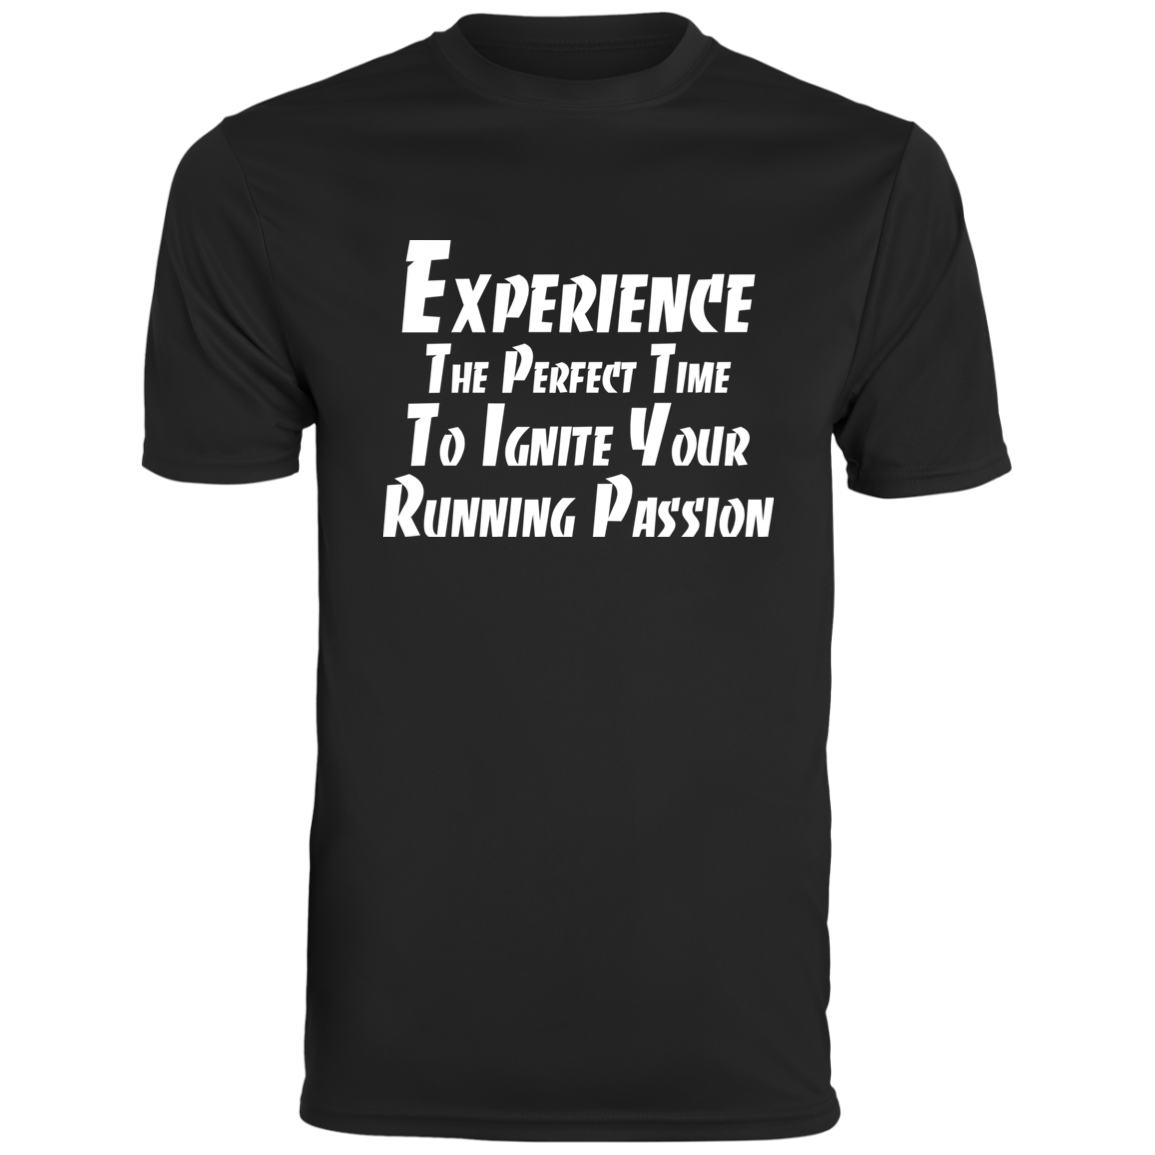 Men's Running Passion Top